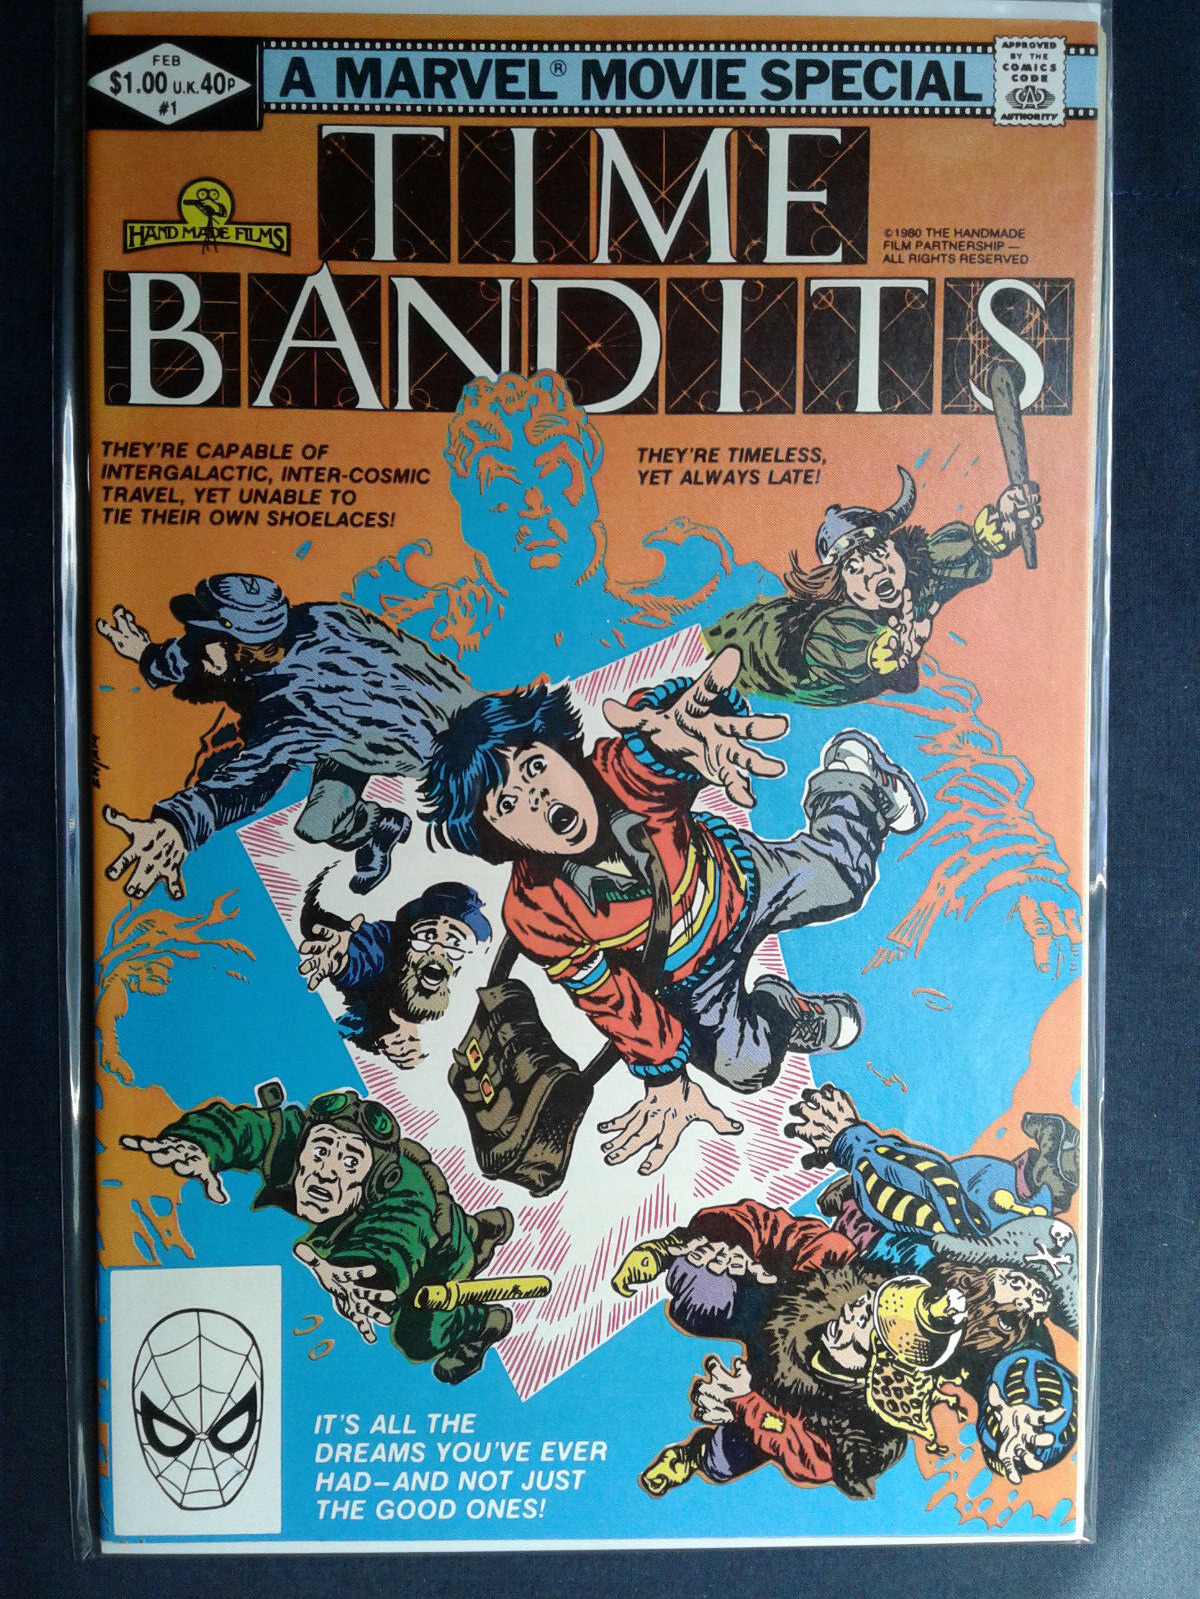 TIME BANDITS #1 MARVEL COMICS MOVIE ADAPTION 1982 NM NM+ 9.4